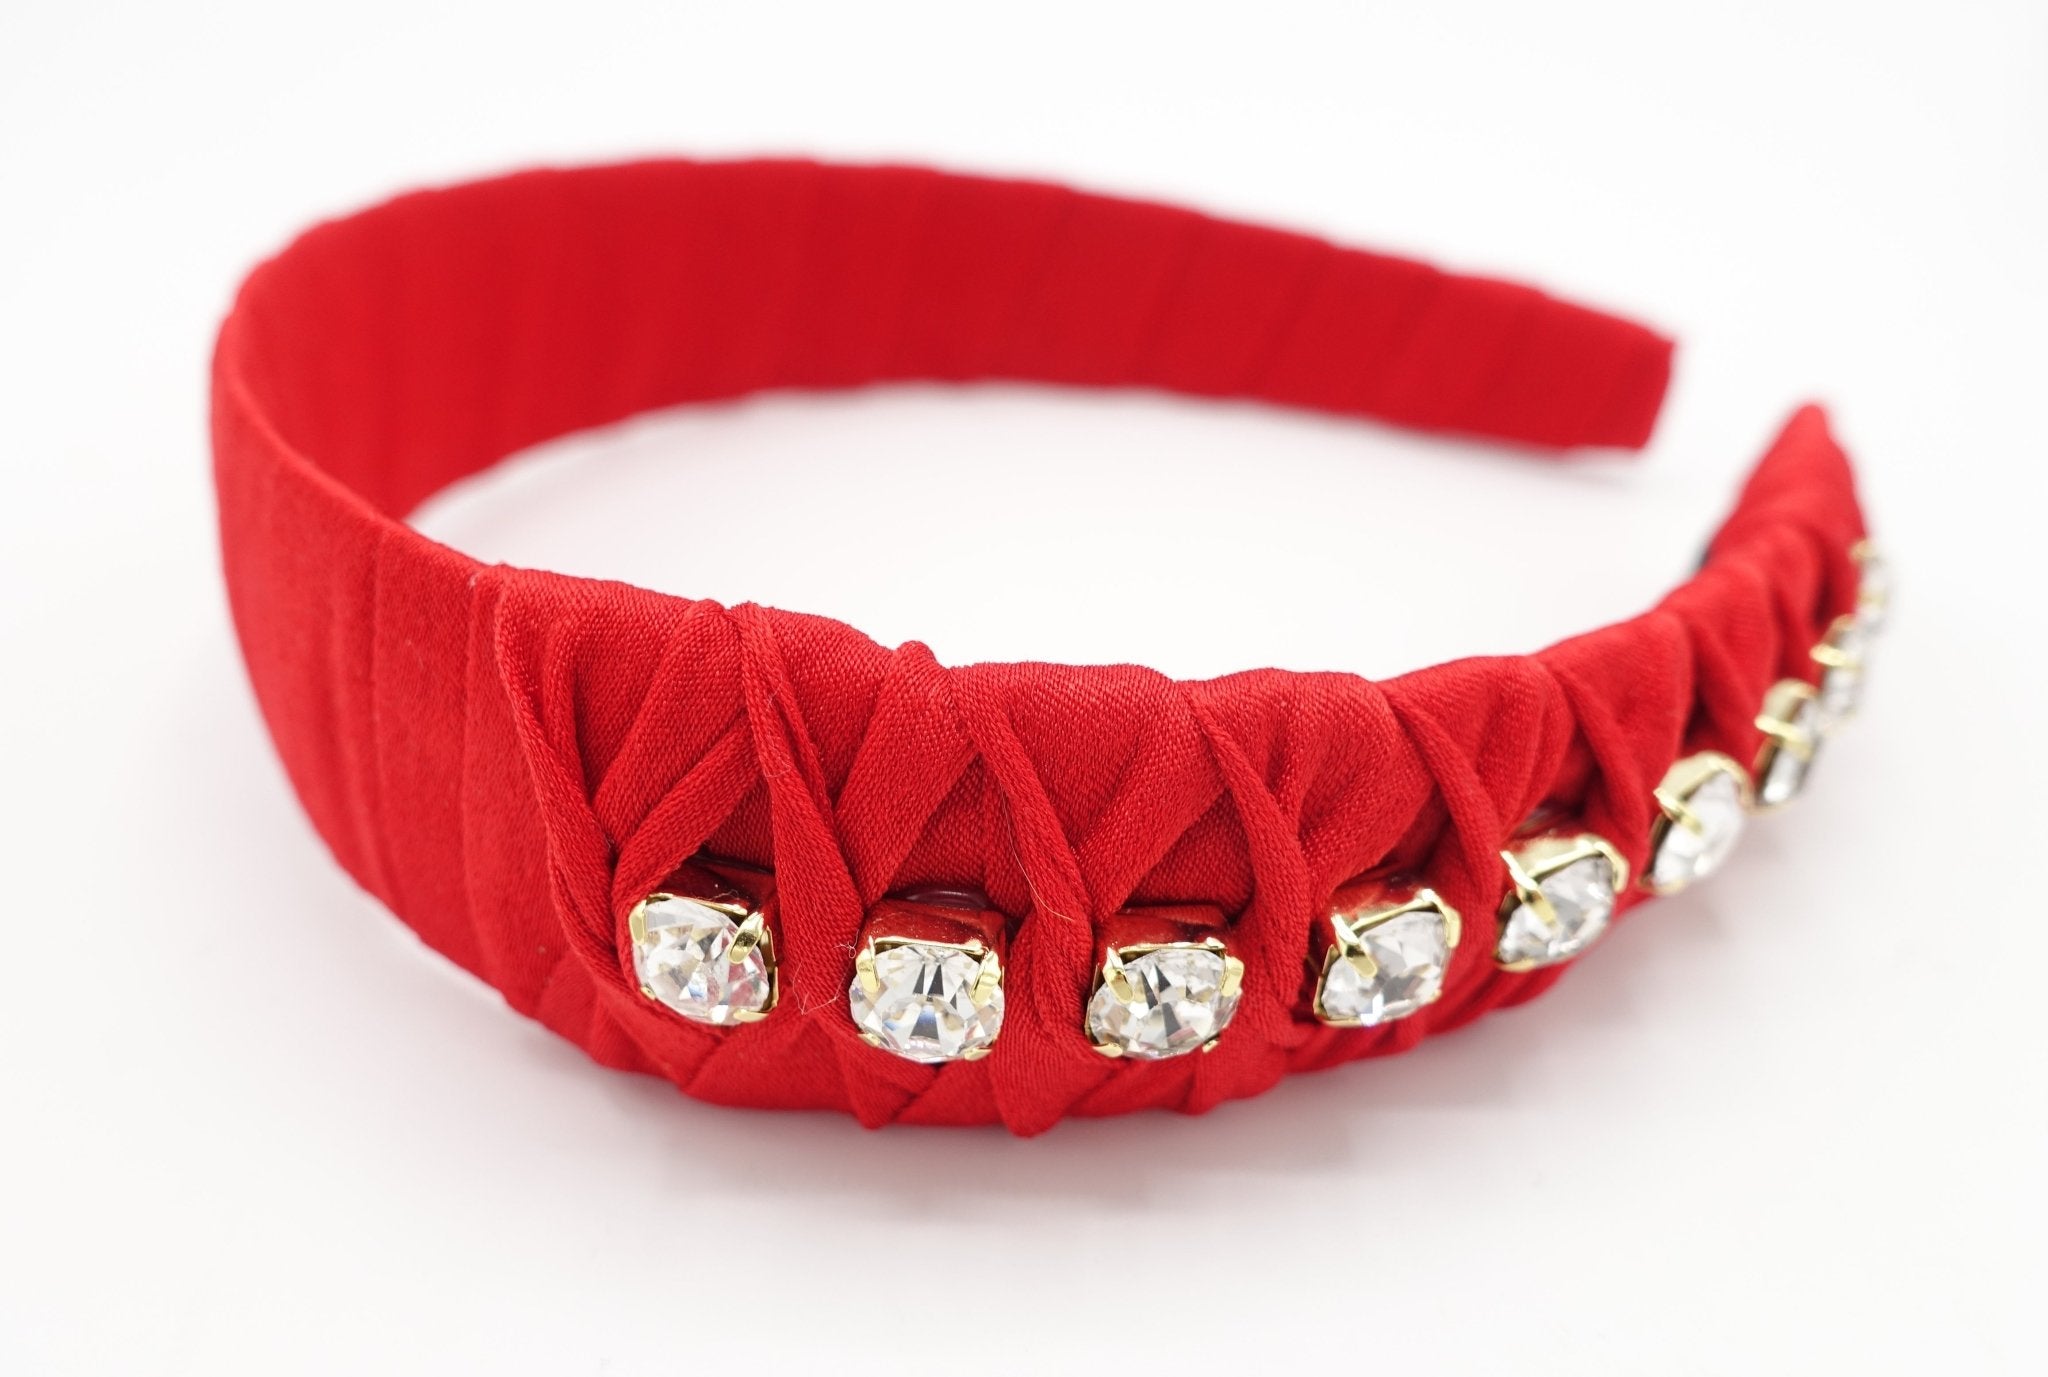 veryshine.com hairband/headband Red rhinestone embellished headband twist wrap hairband women hair accessory